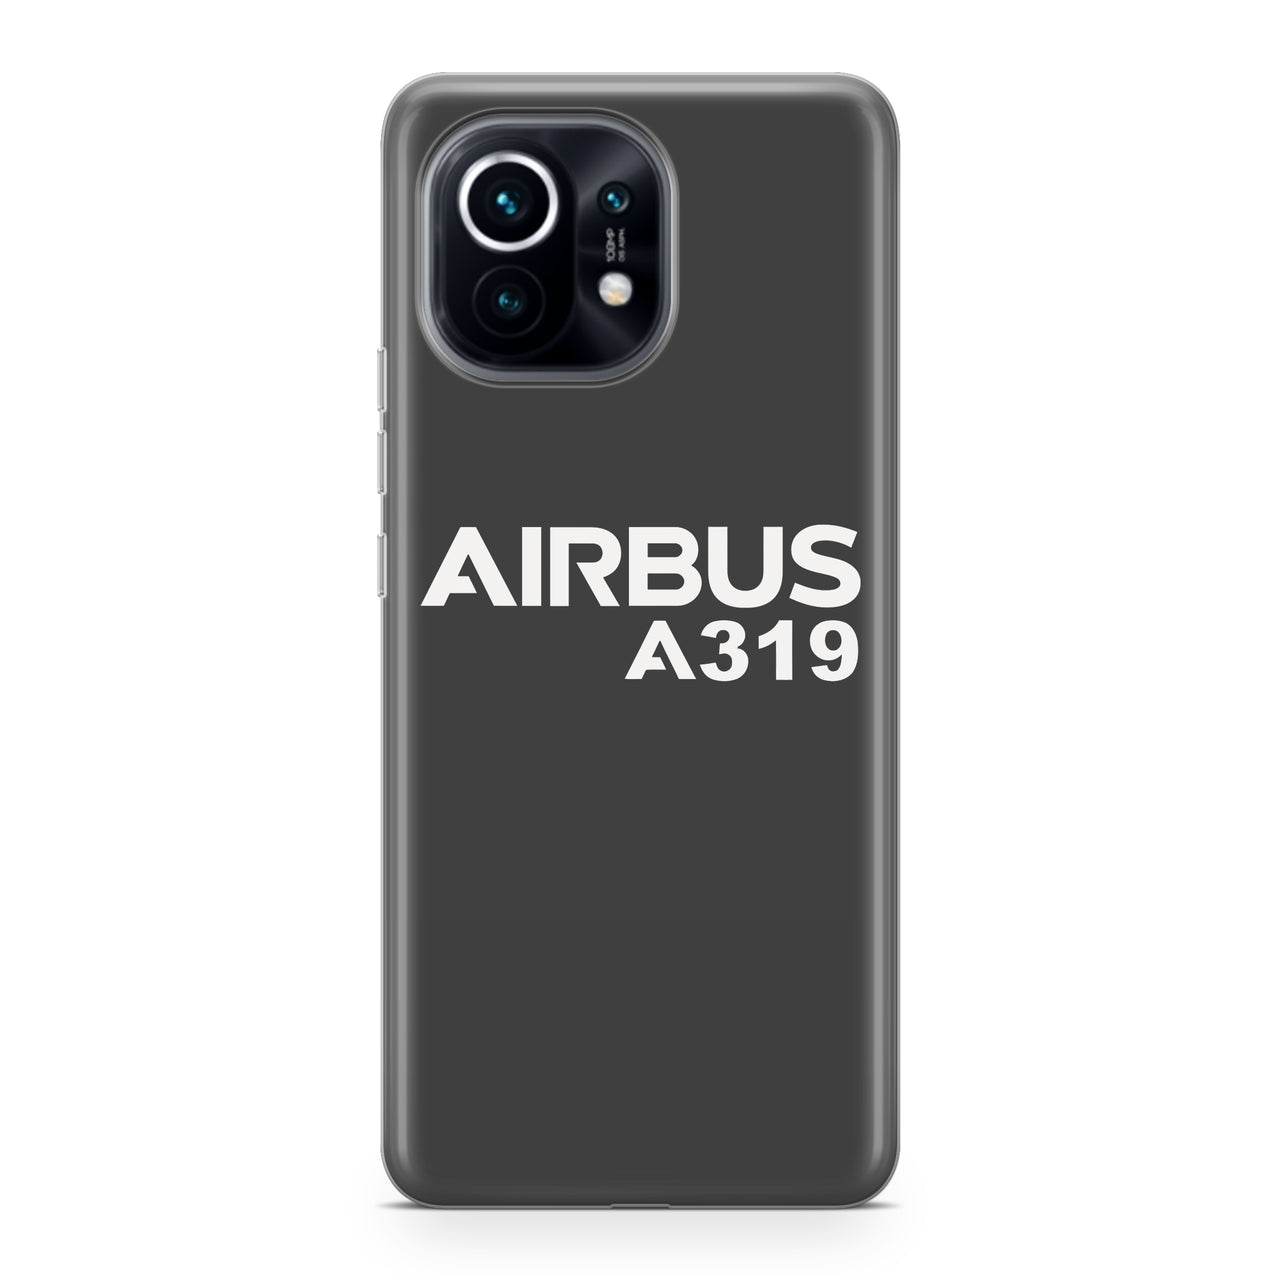 Airbus A319 & Text Designed Xiaomi Cases